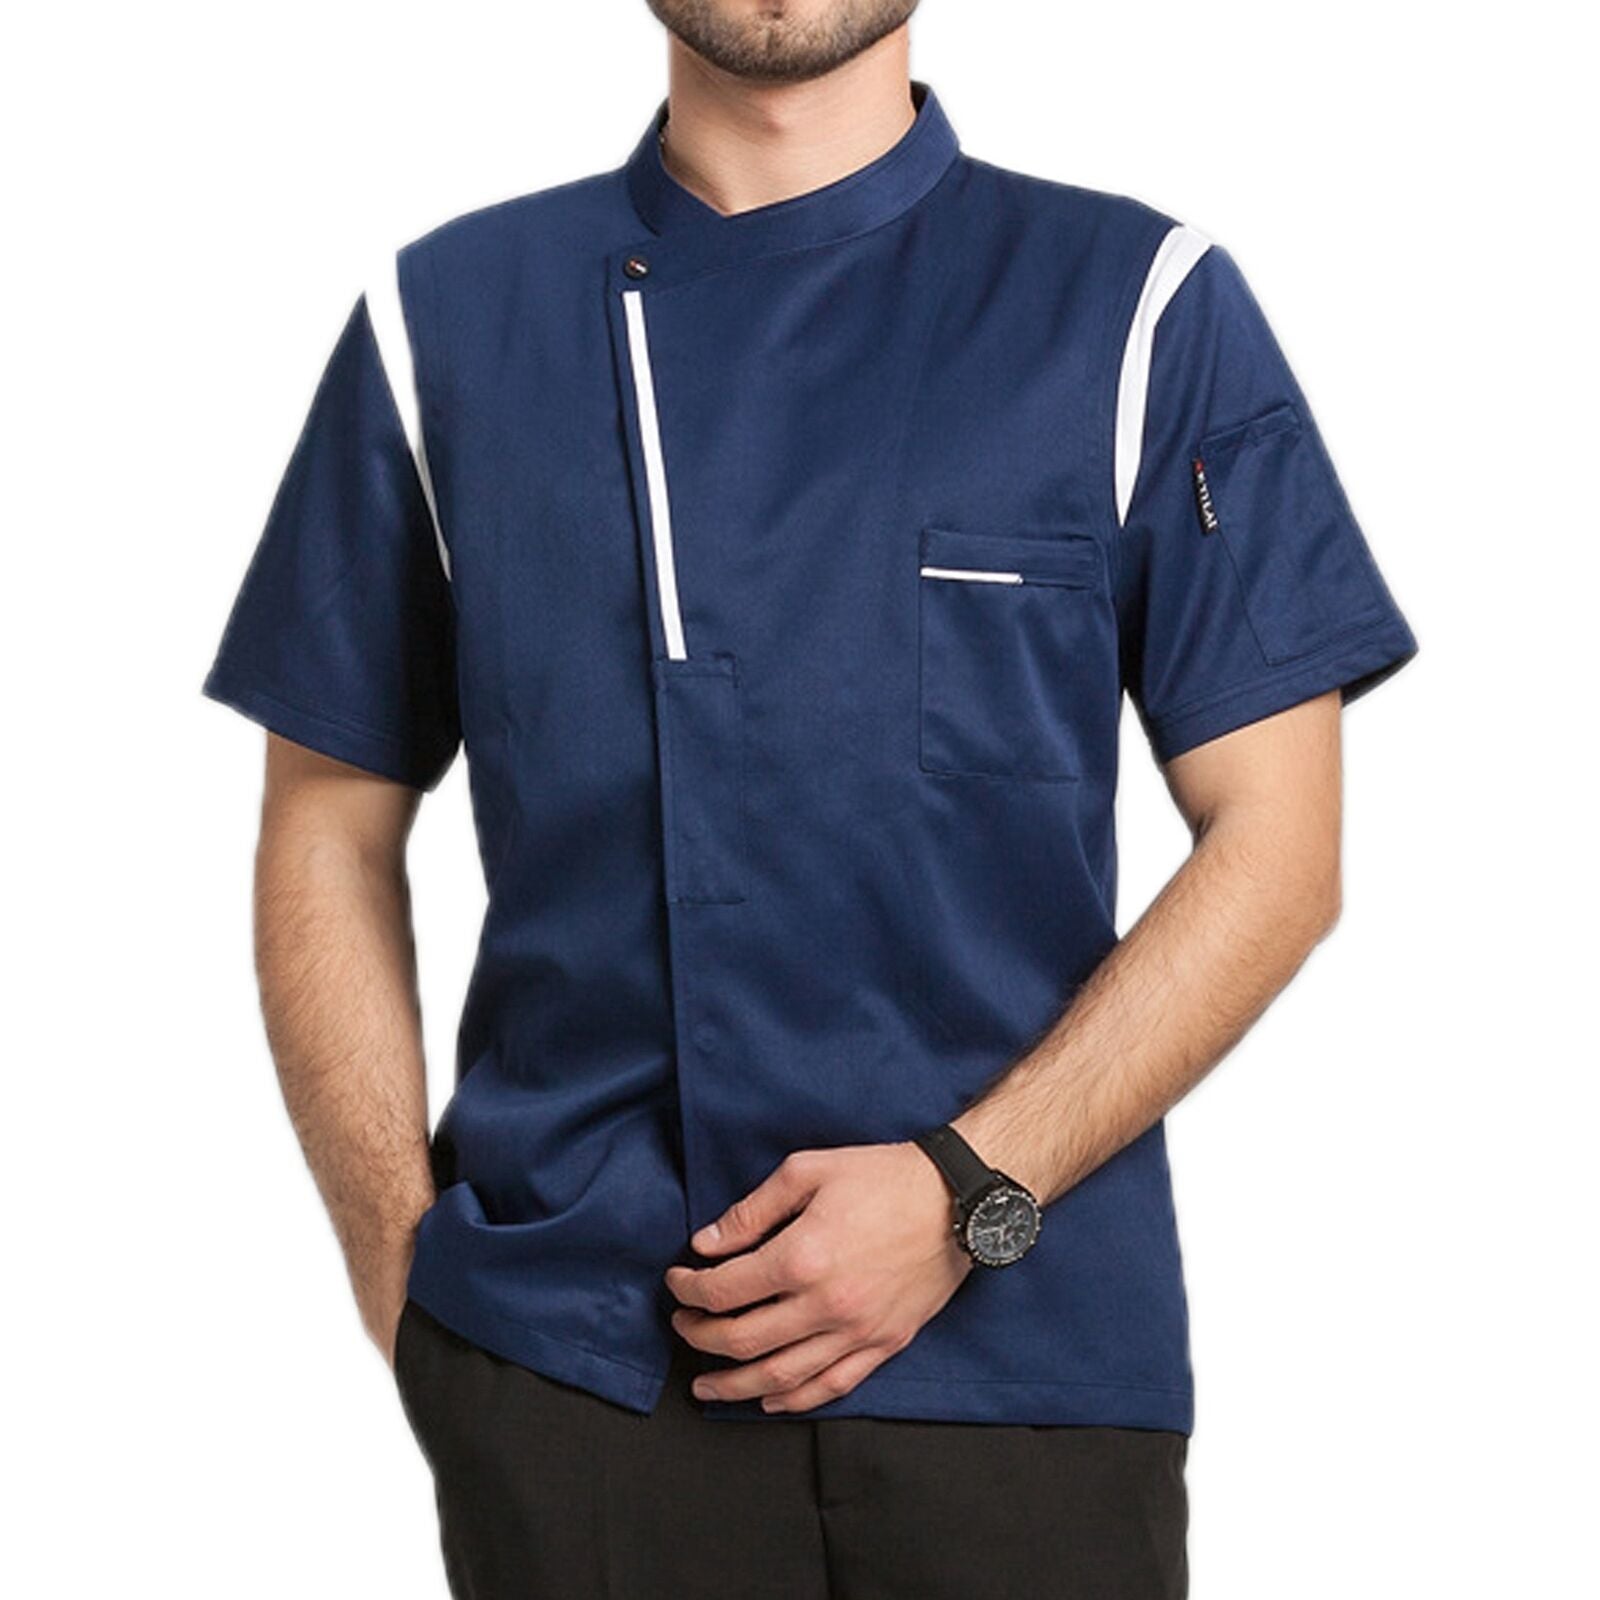 Unisex Breathable Cook Jacket Short Sleeve Chef Uniform Tops with Pocket Coat